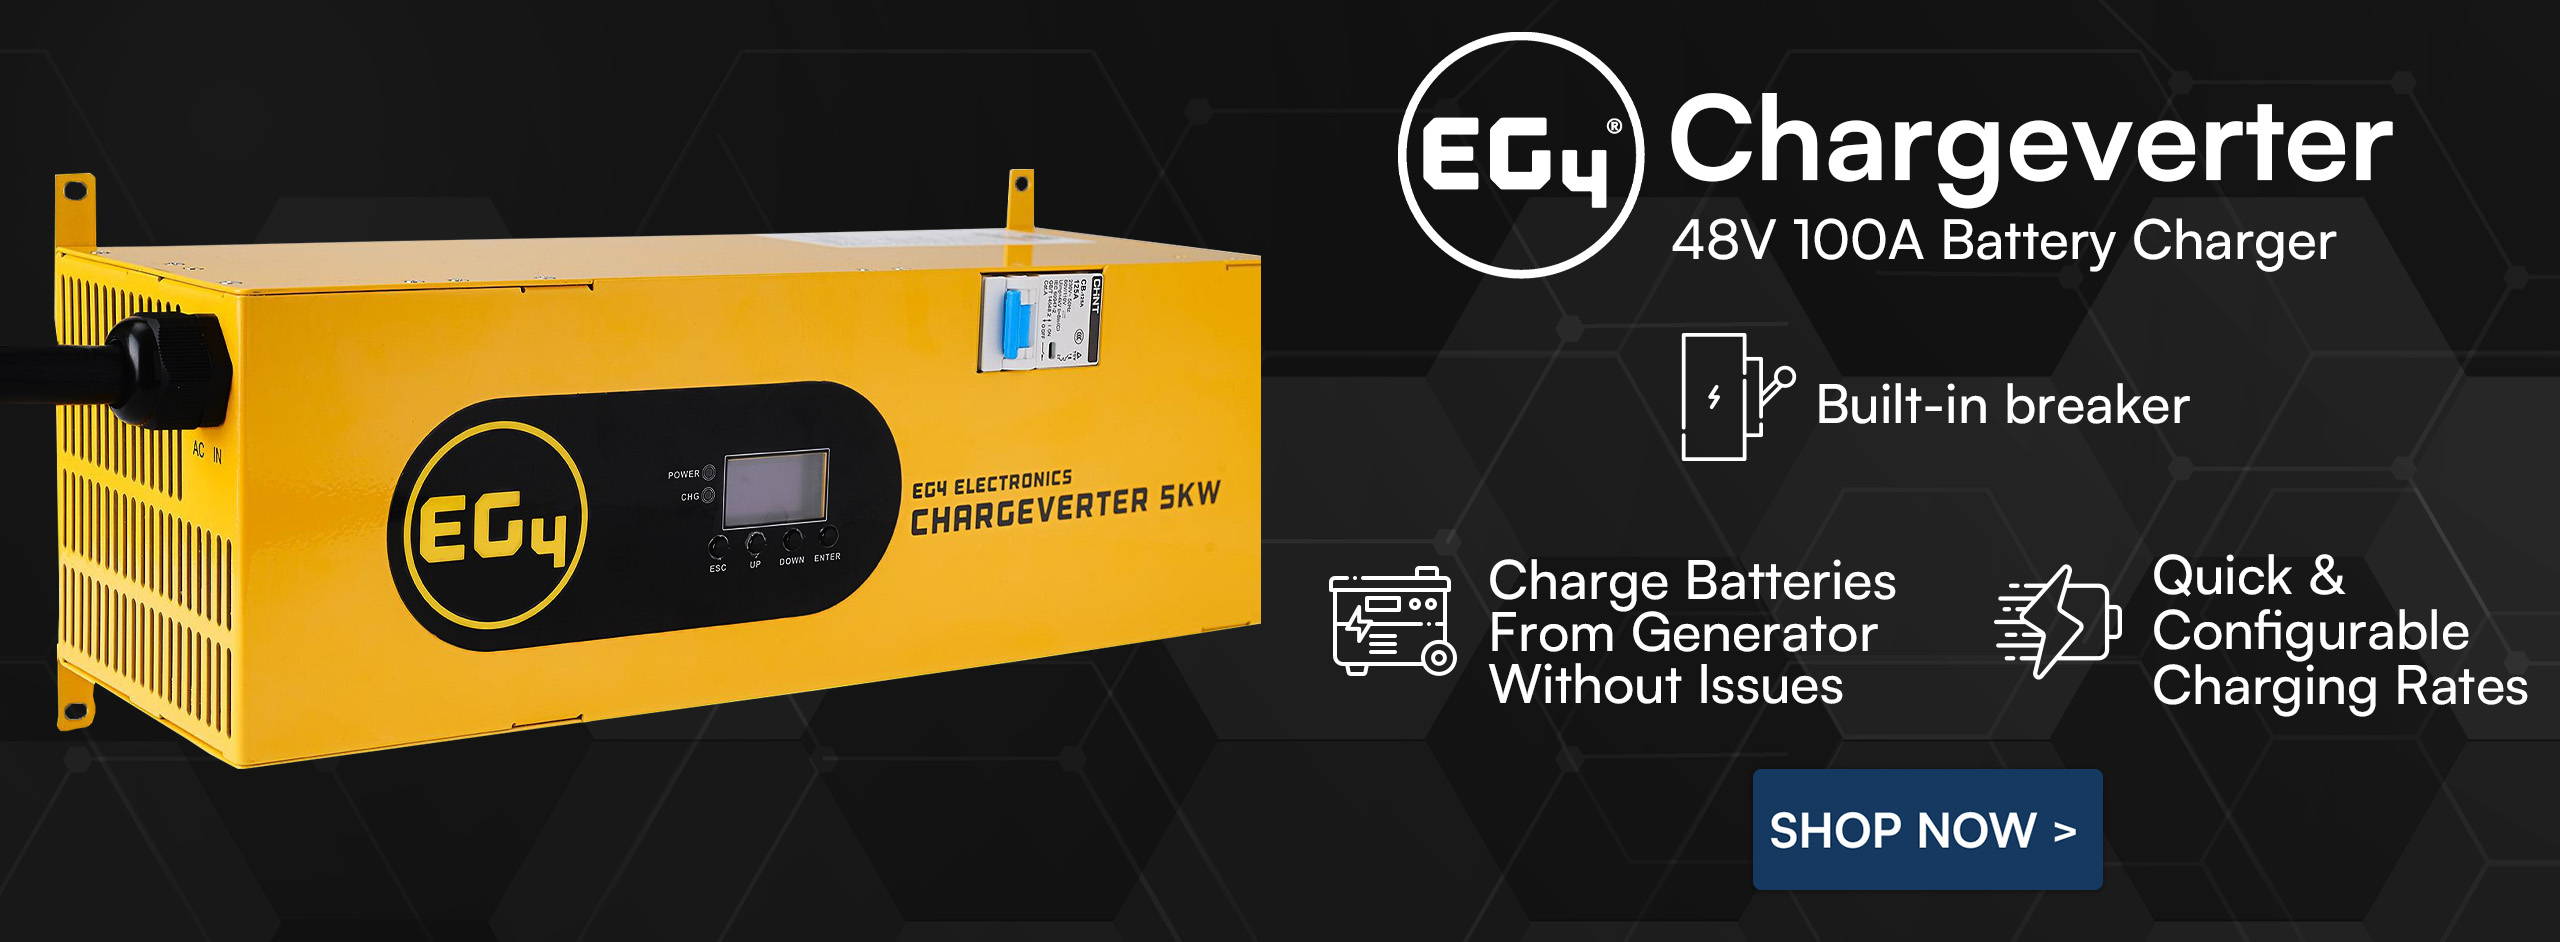 Signature Solar | EG4 Chargeverter 48V 100A Battery Charger